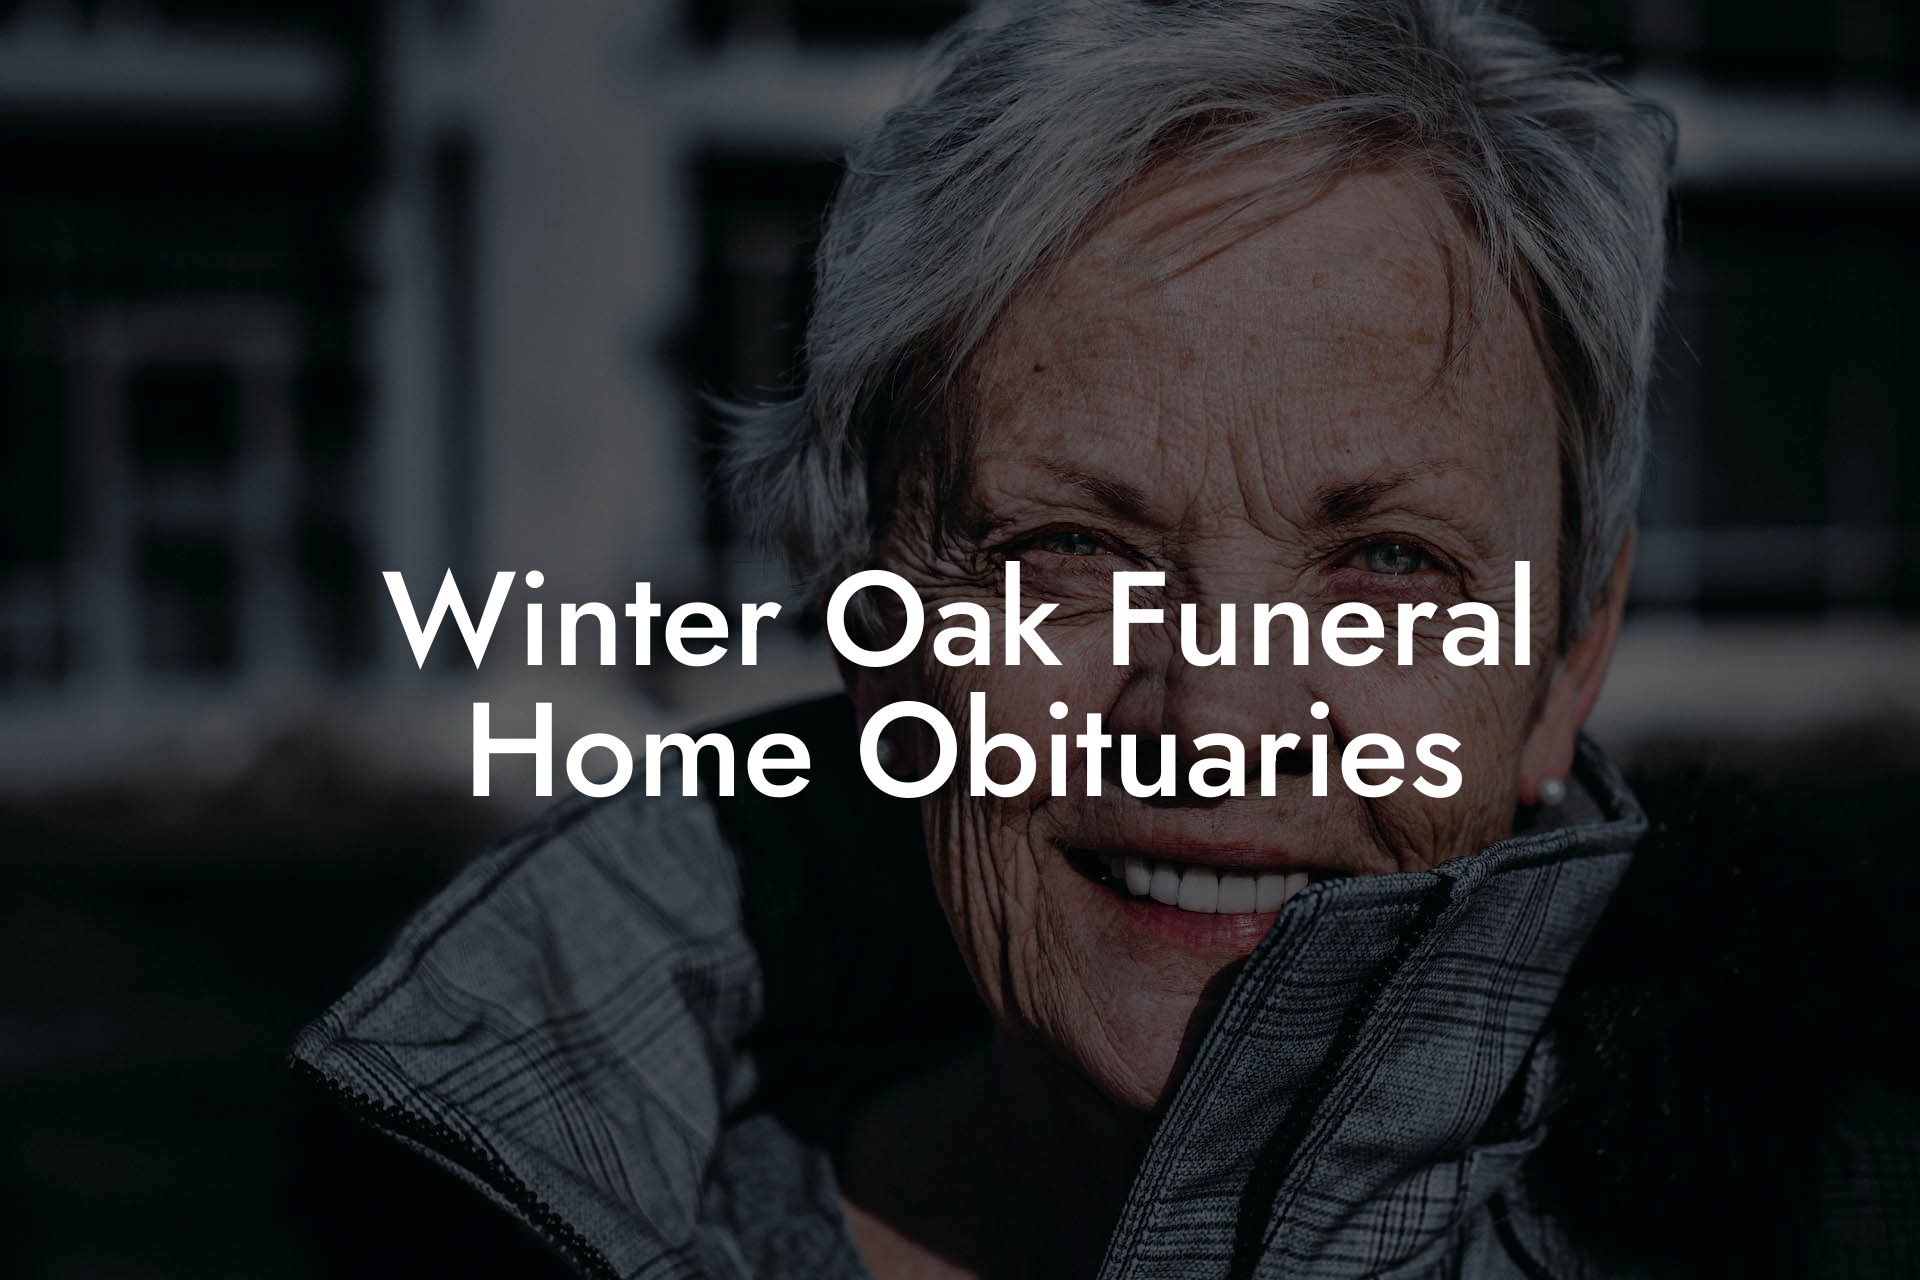 Winter Oak Funeral Home Obituaries